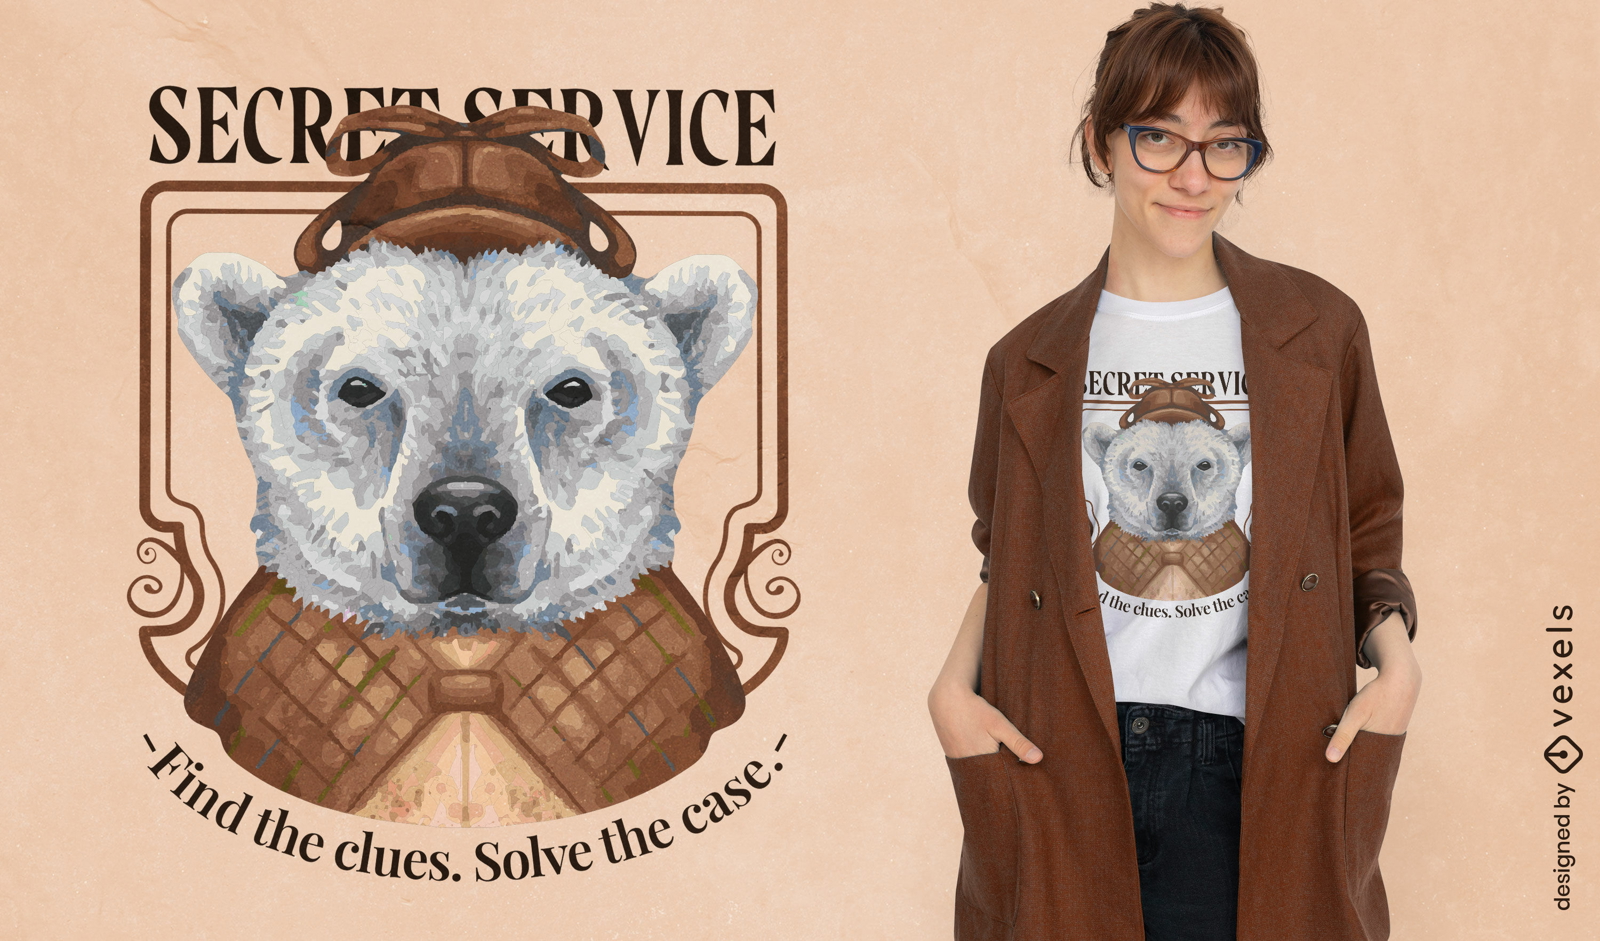 Diseño de camiseta de oso polar del servicio secreto.